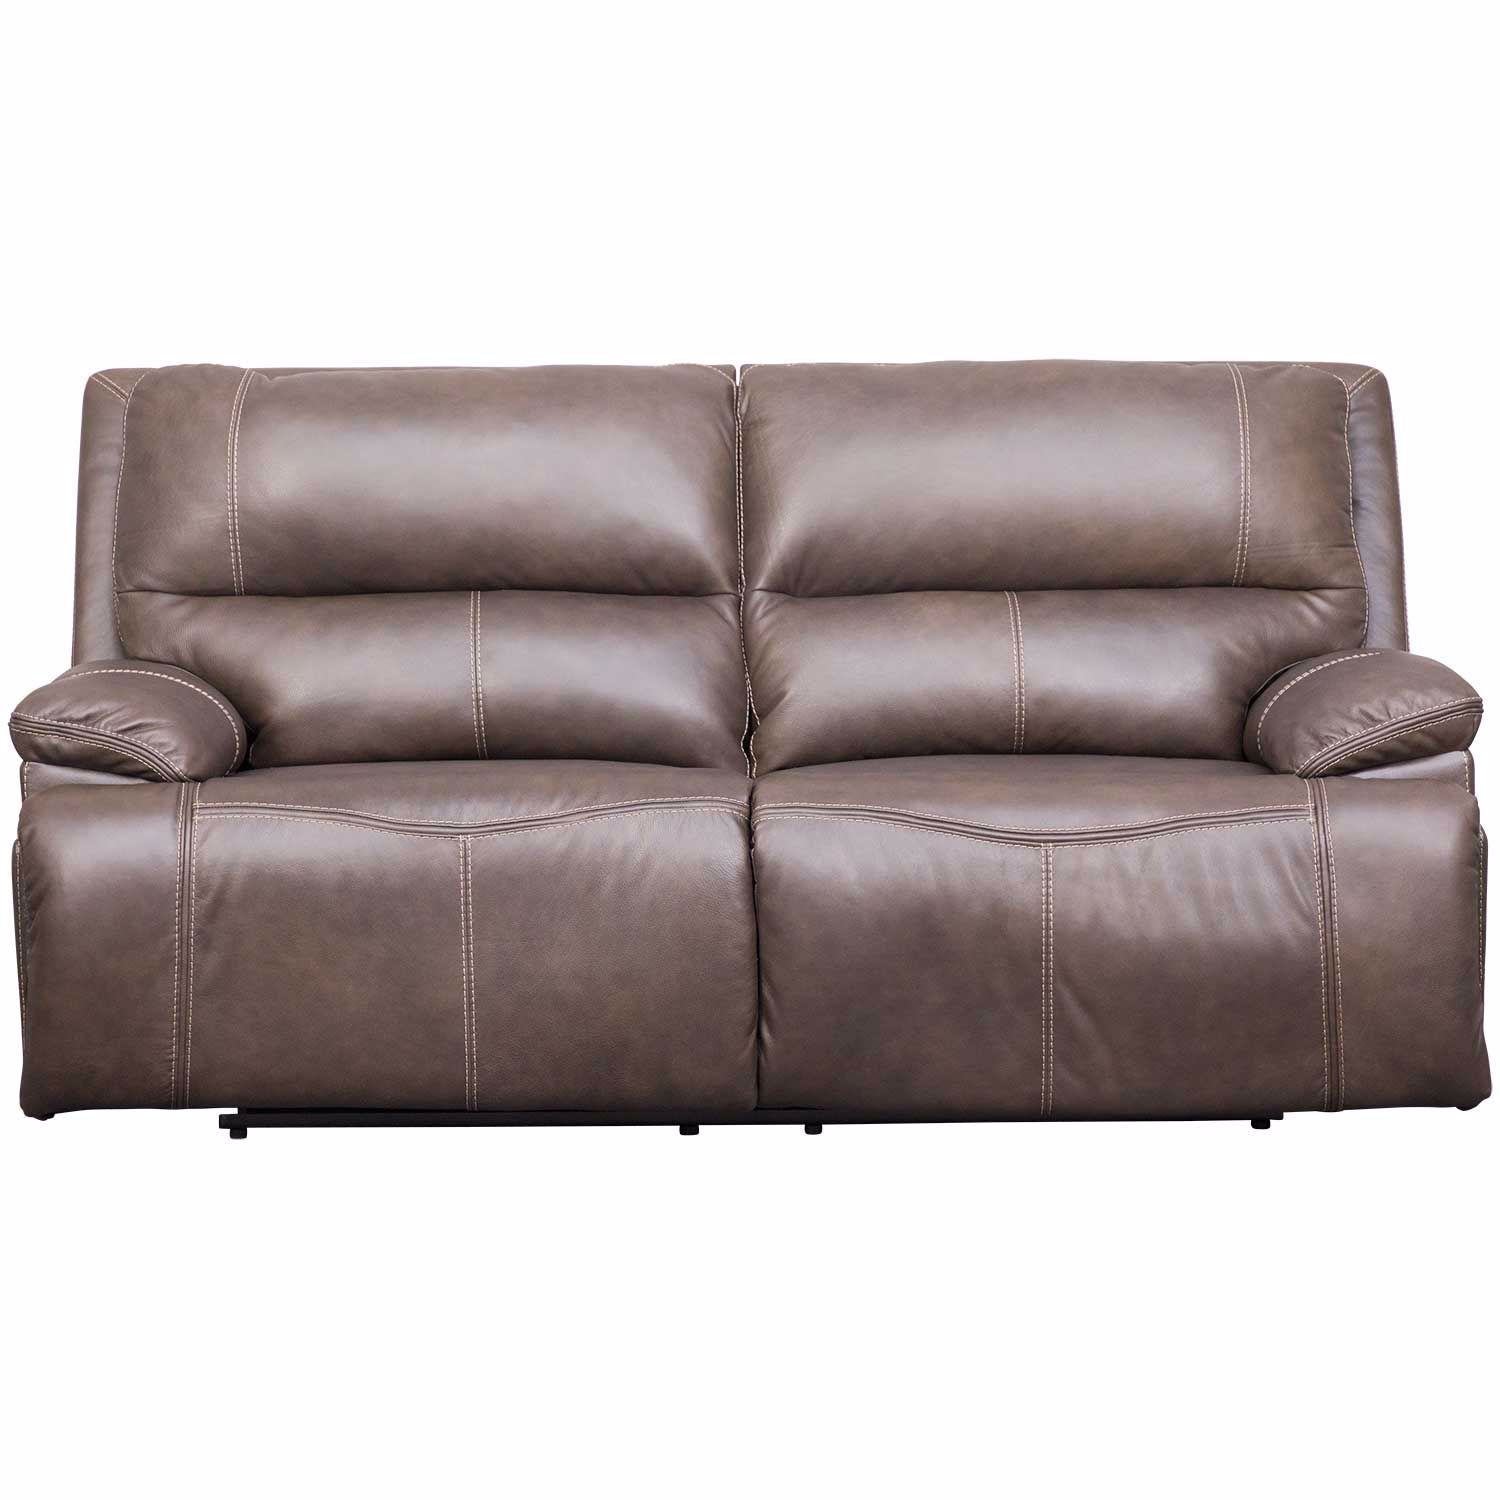 Ricmen Walnut Italian Leather Power Reclining Sofa with